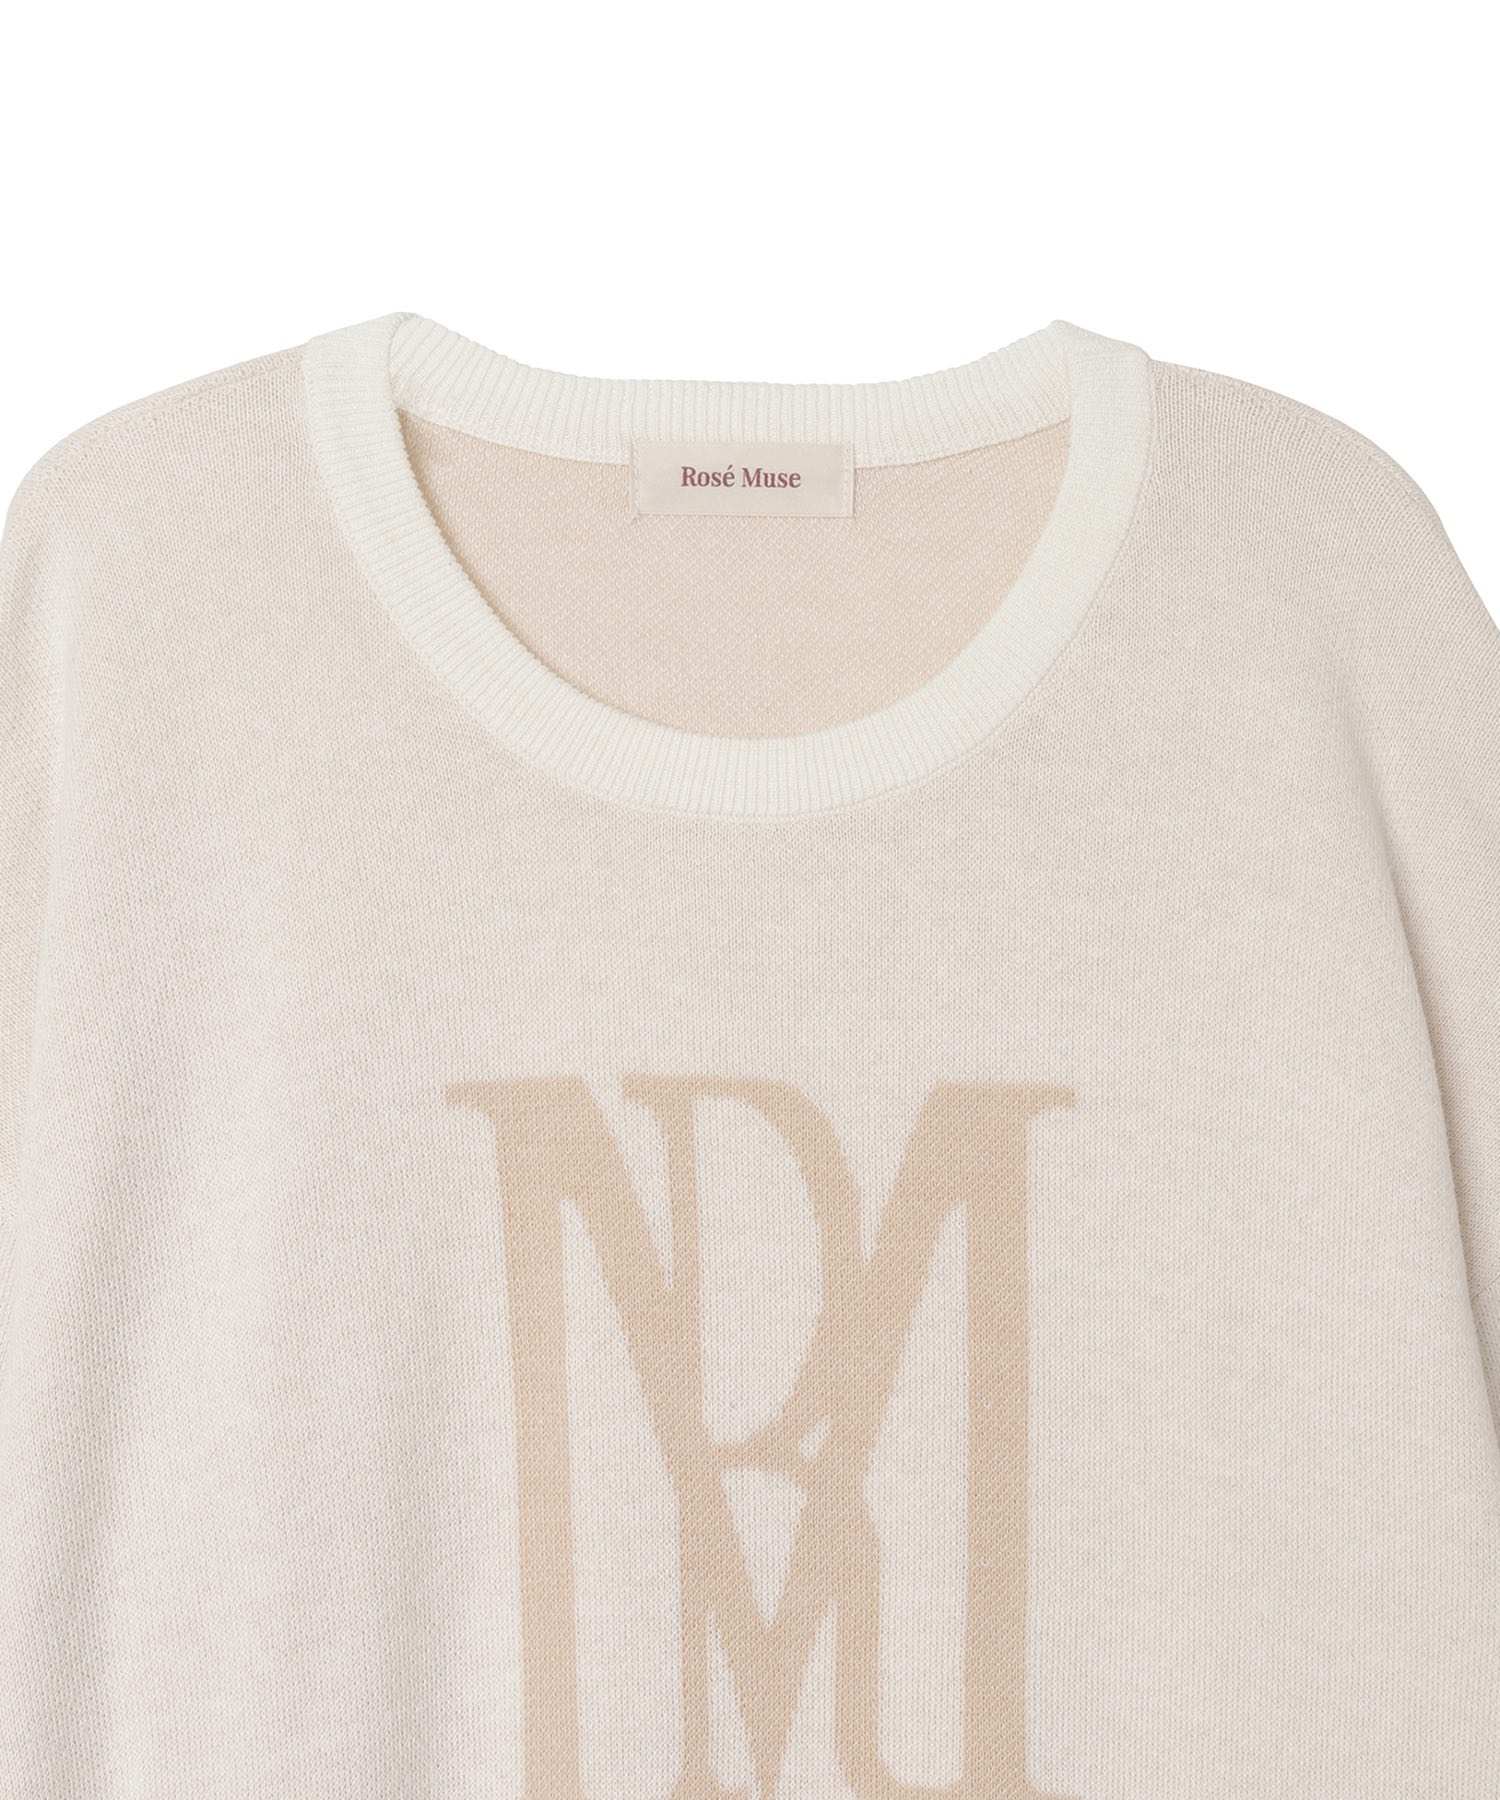 Rosé Muse RM logo knit_L size【white】-